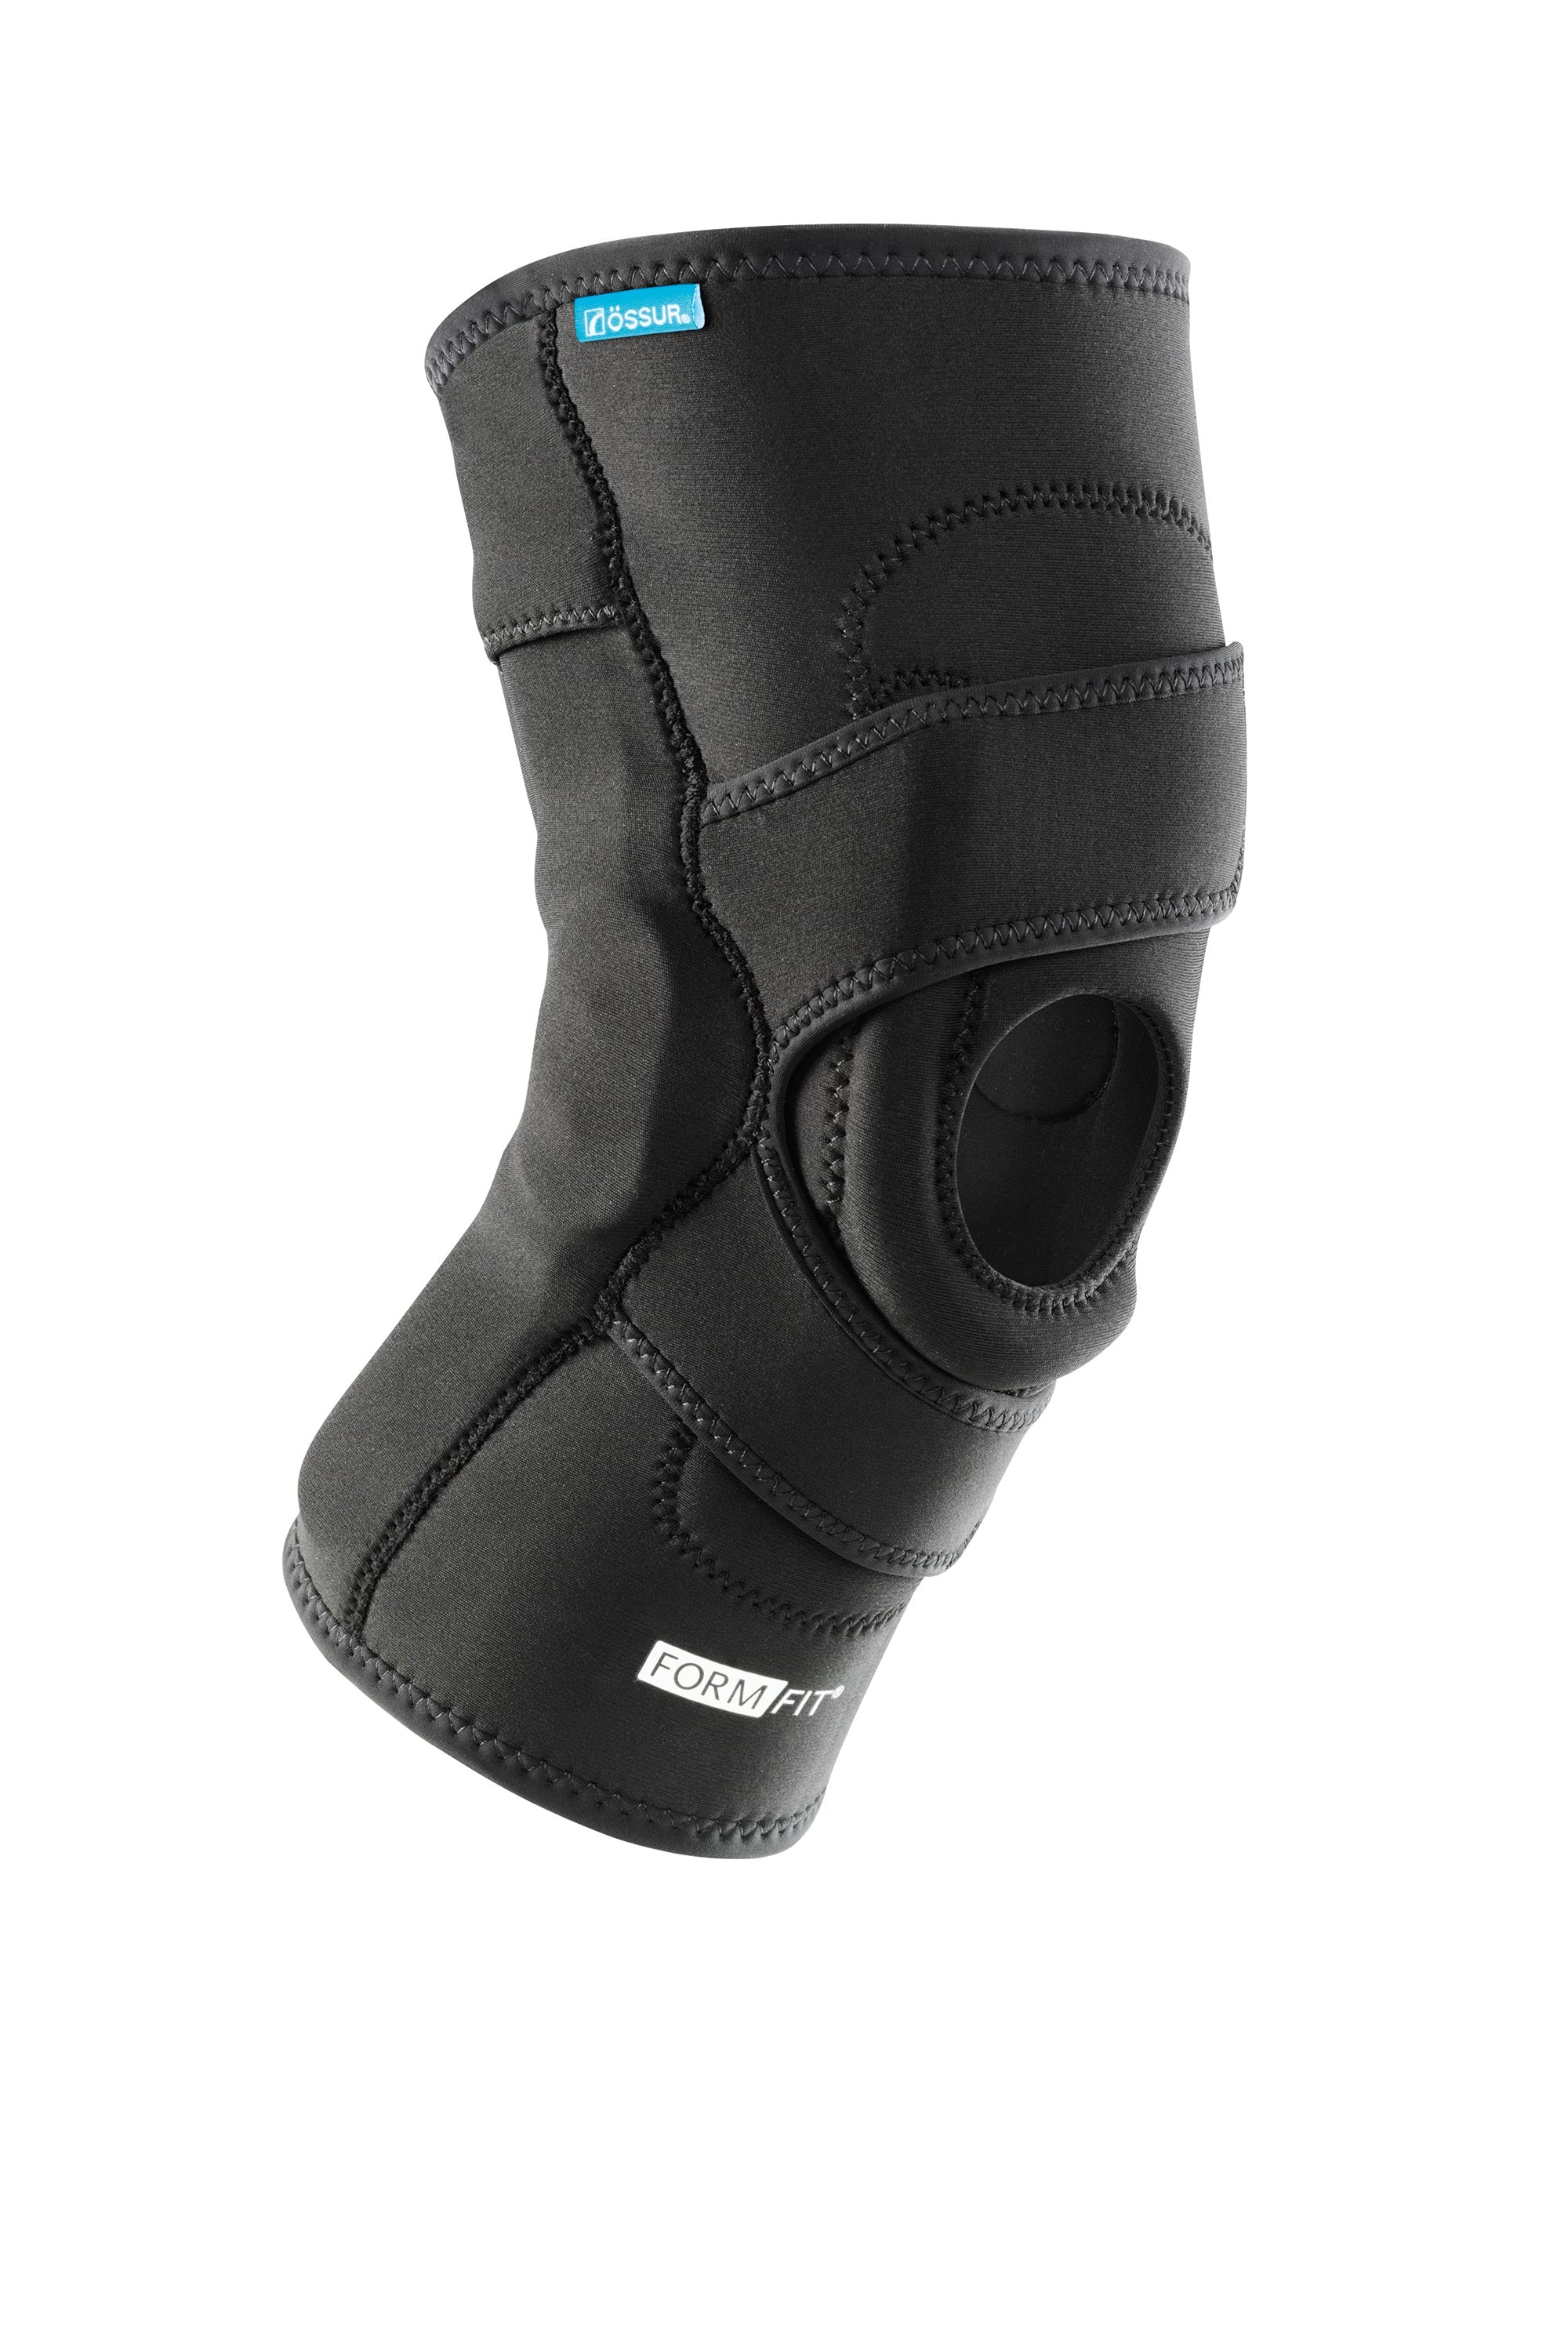 Össur Formfit® Lateral J Knee Brace – Support Brace Australia